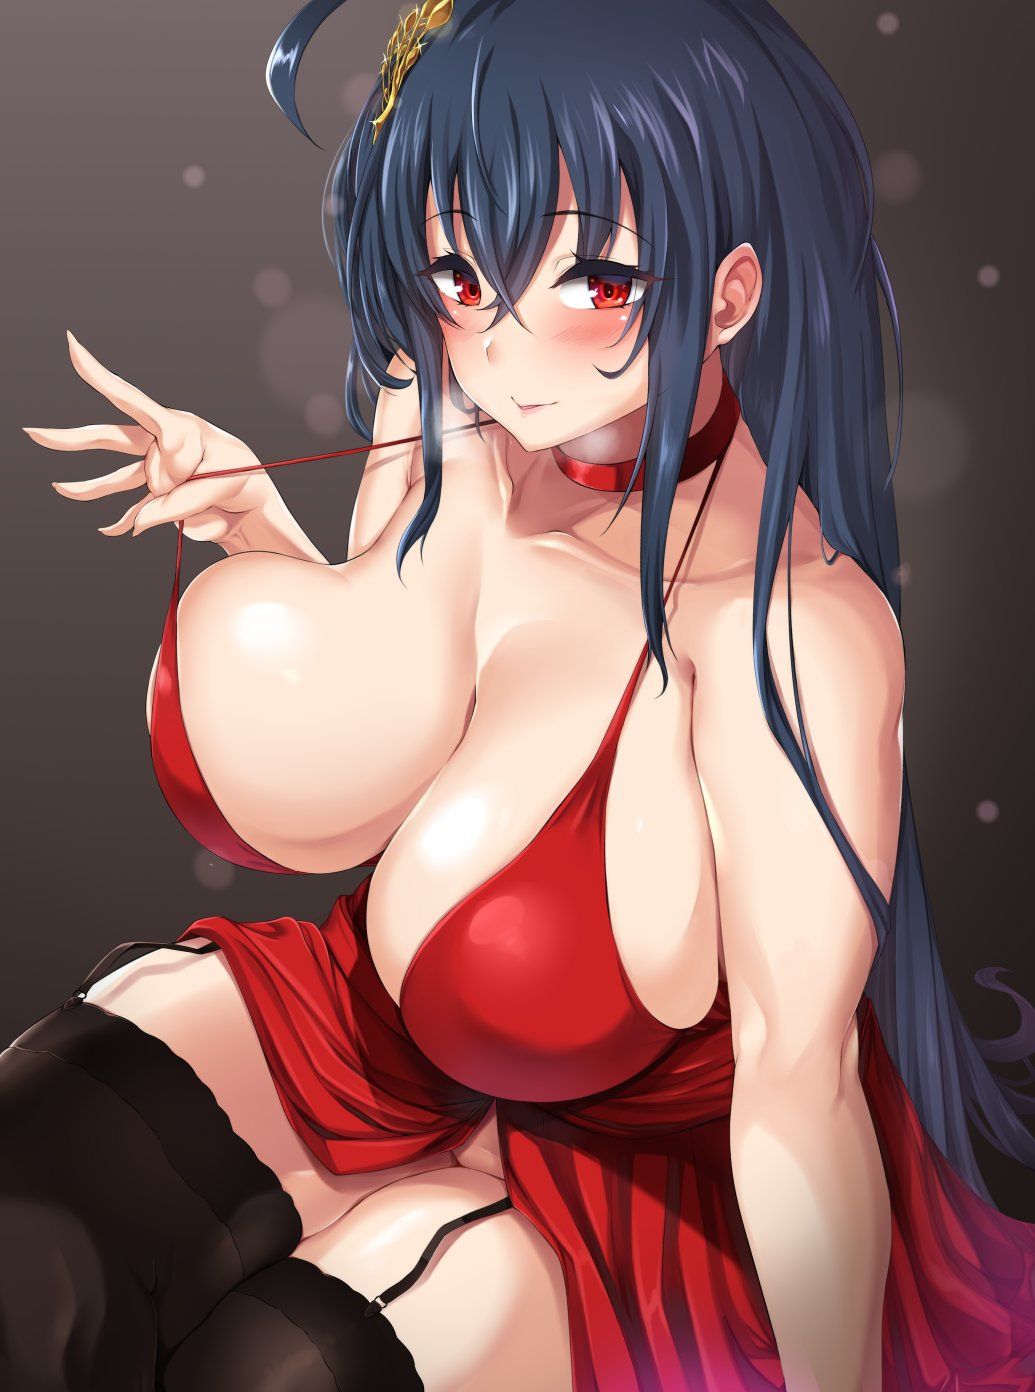 【Erotic Anime Summary】 Ahmiren Taiho's hailless figure is too skeptic erotic image 【Secondary erotic】 29